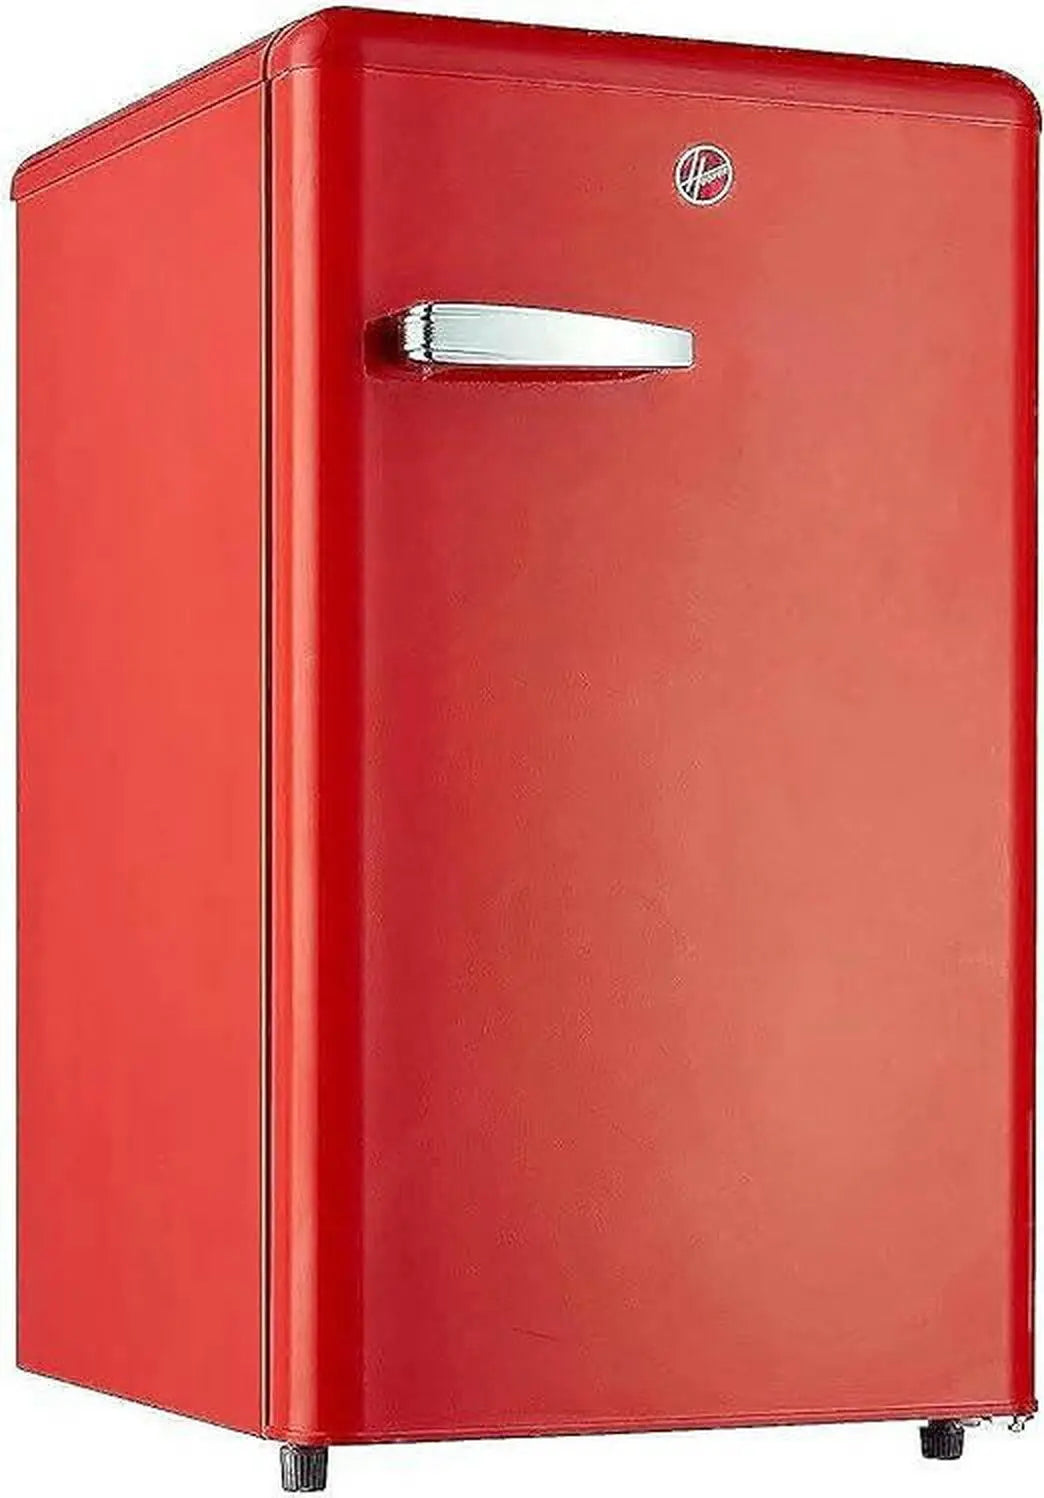 Hoover 123 Liters Single Door Retro Style Refrigerator